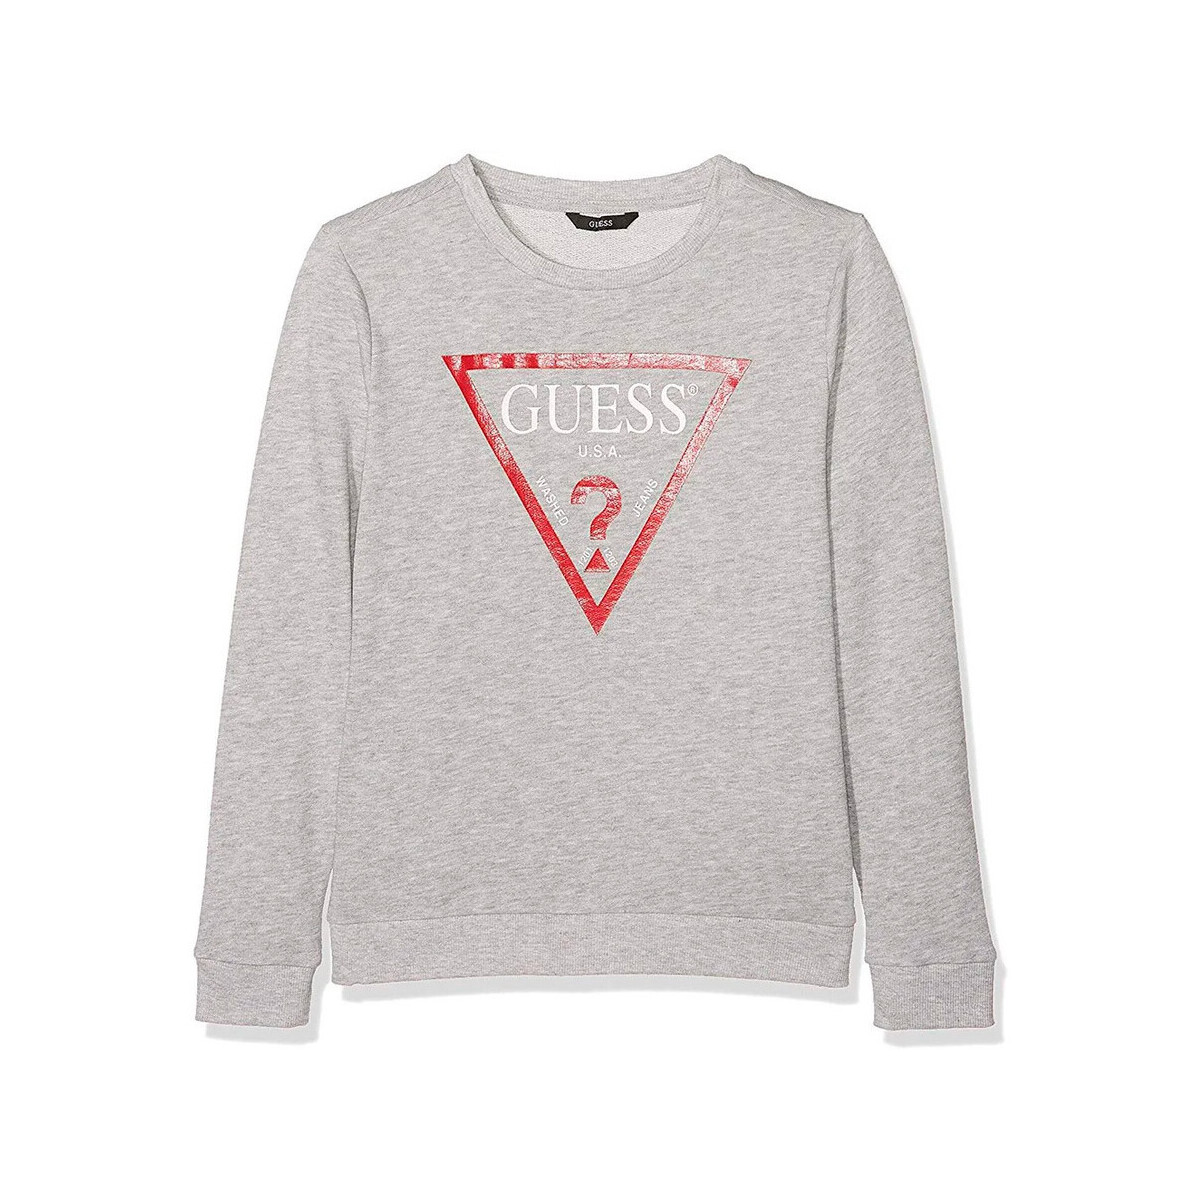 Textiel Jongens Sweaters / Sweatshirts Guess  Grijs